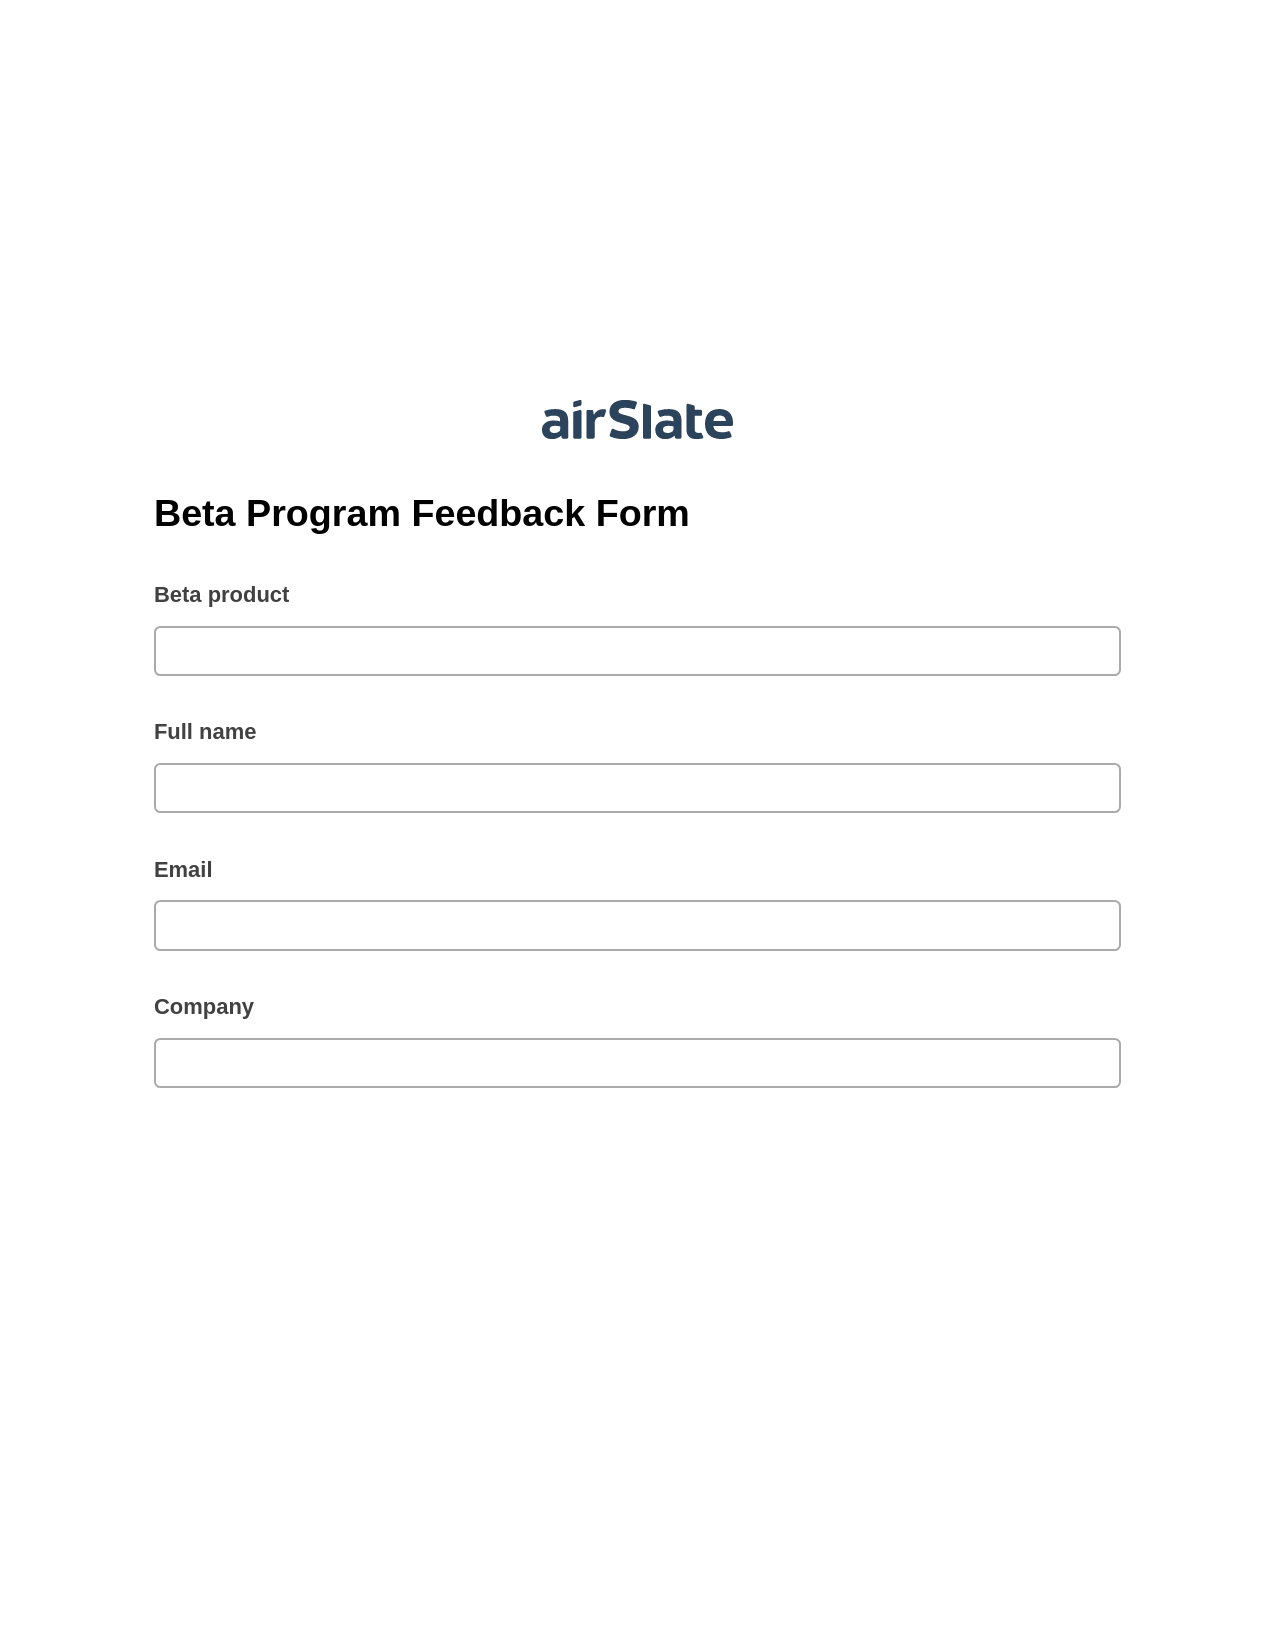 Beta Program Feedback Form Pre-fill from CSV File Bot, Audit Trail Bot, Dropbox Bot